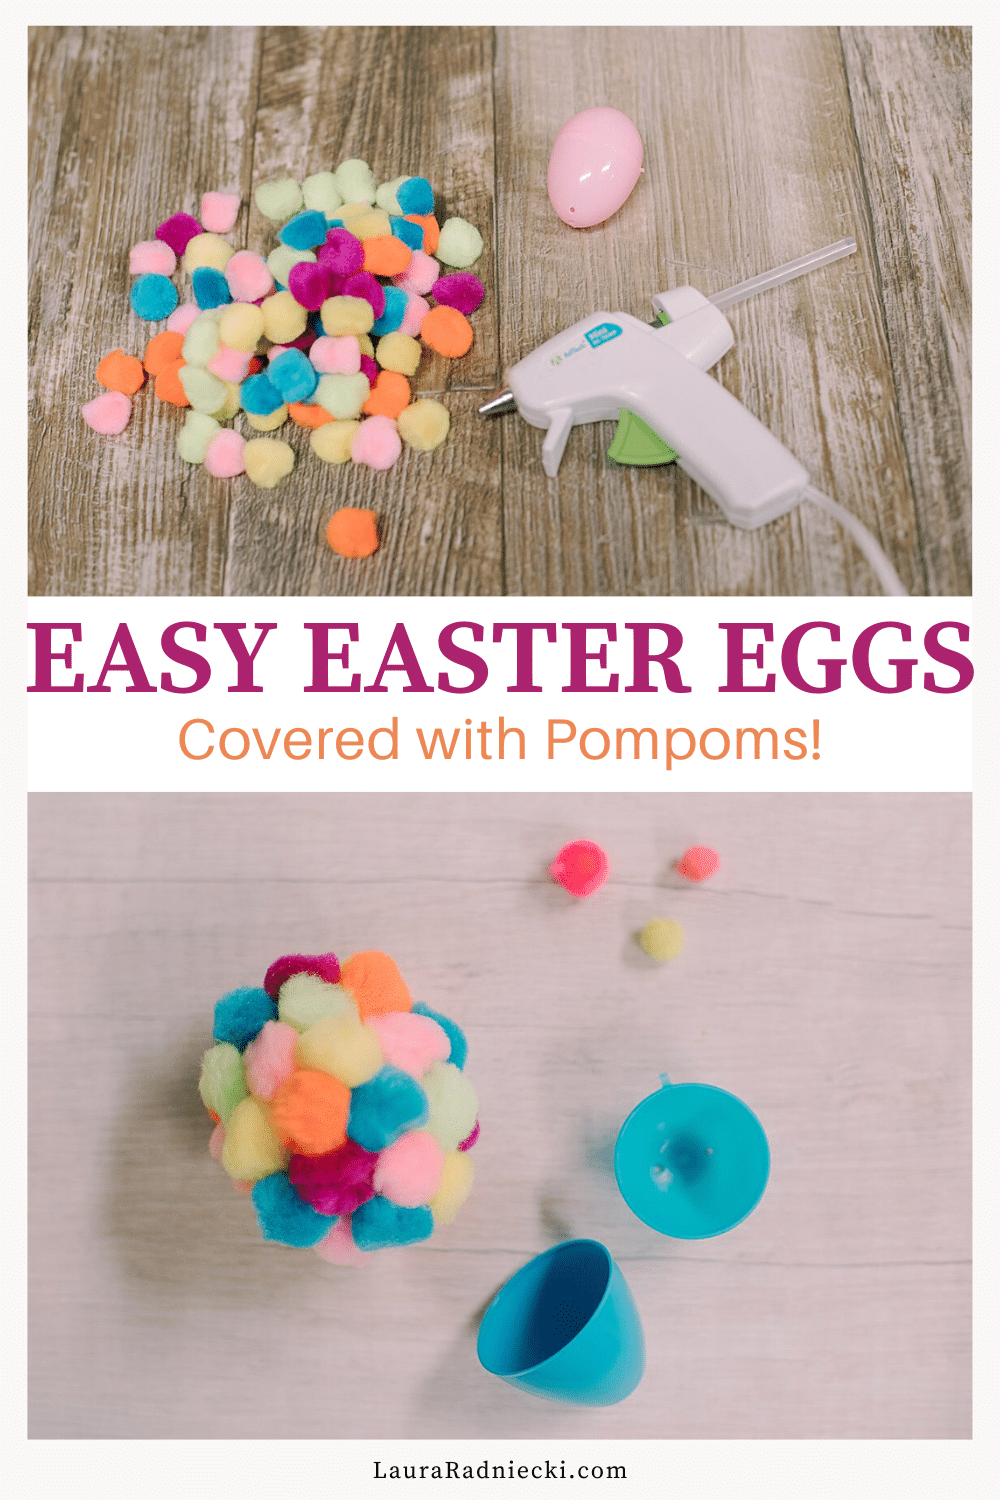 How to Make Pompom-Covered Easter Eggs